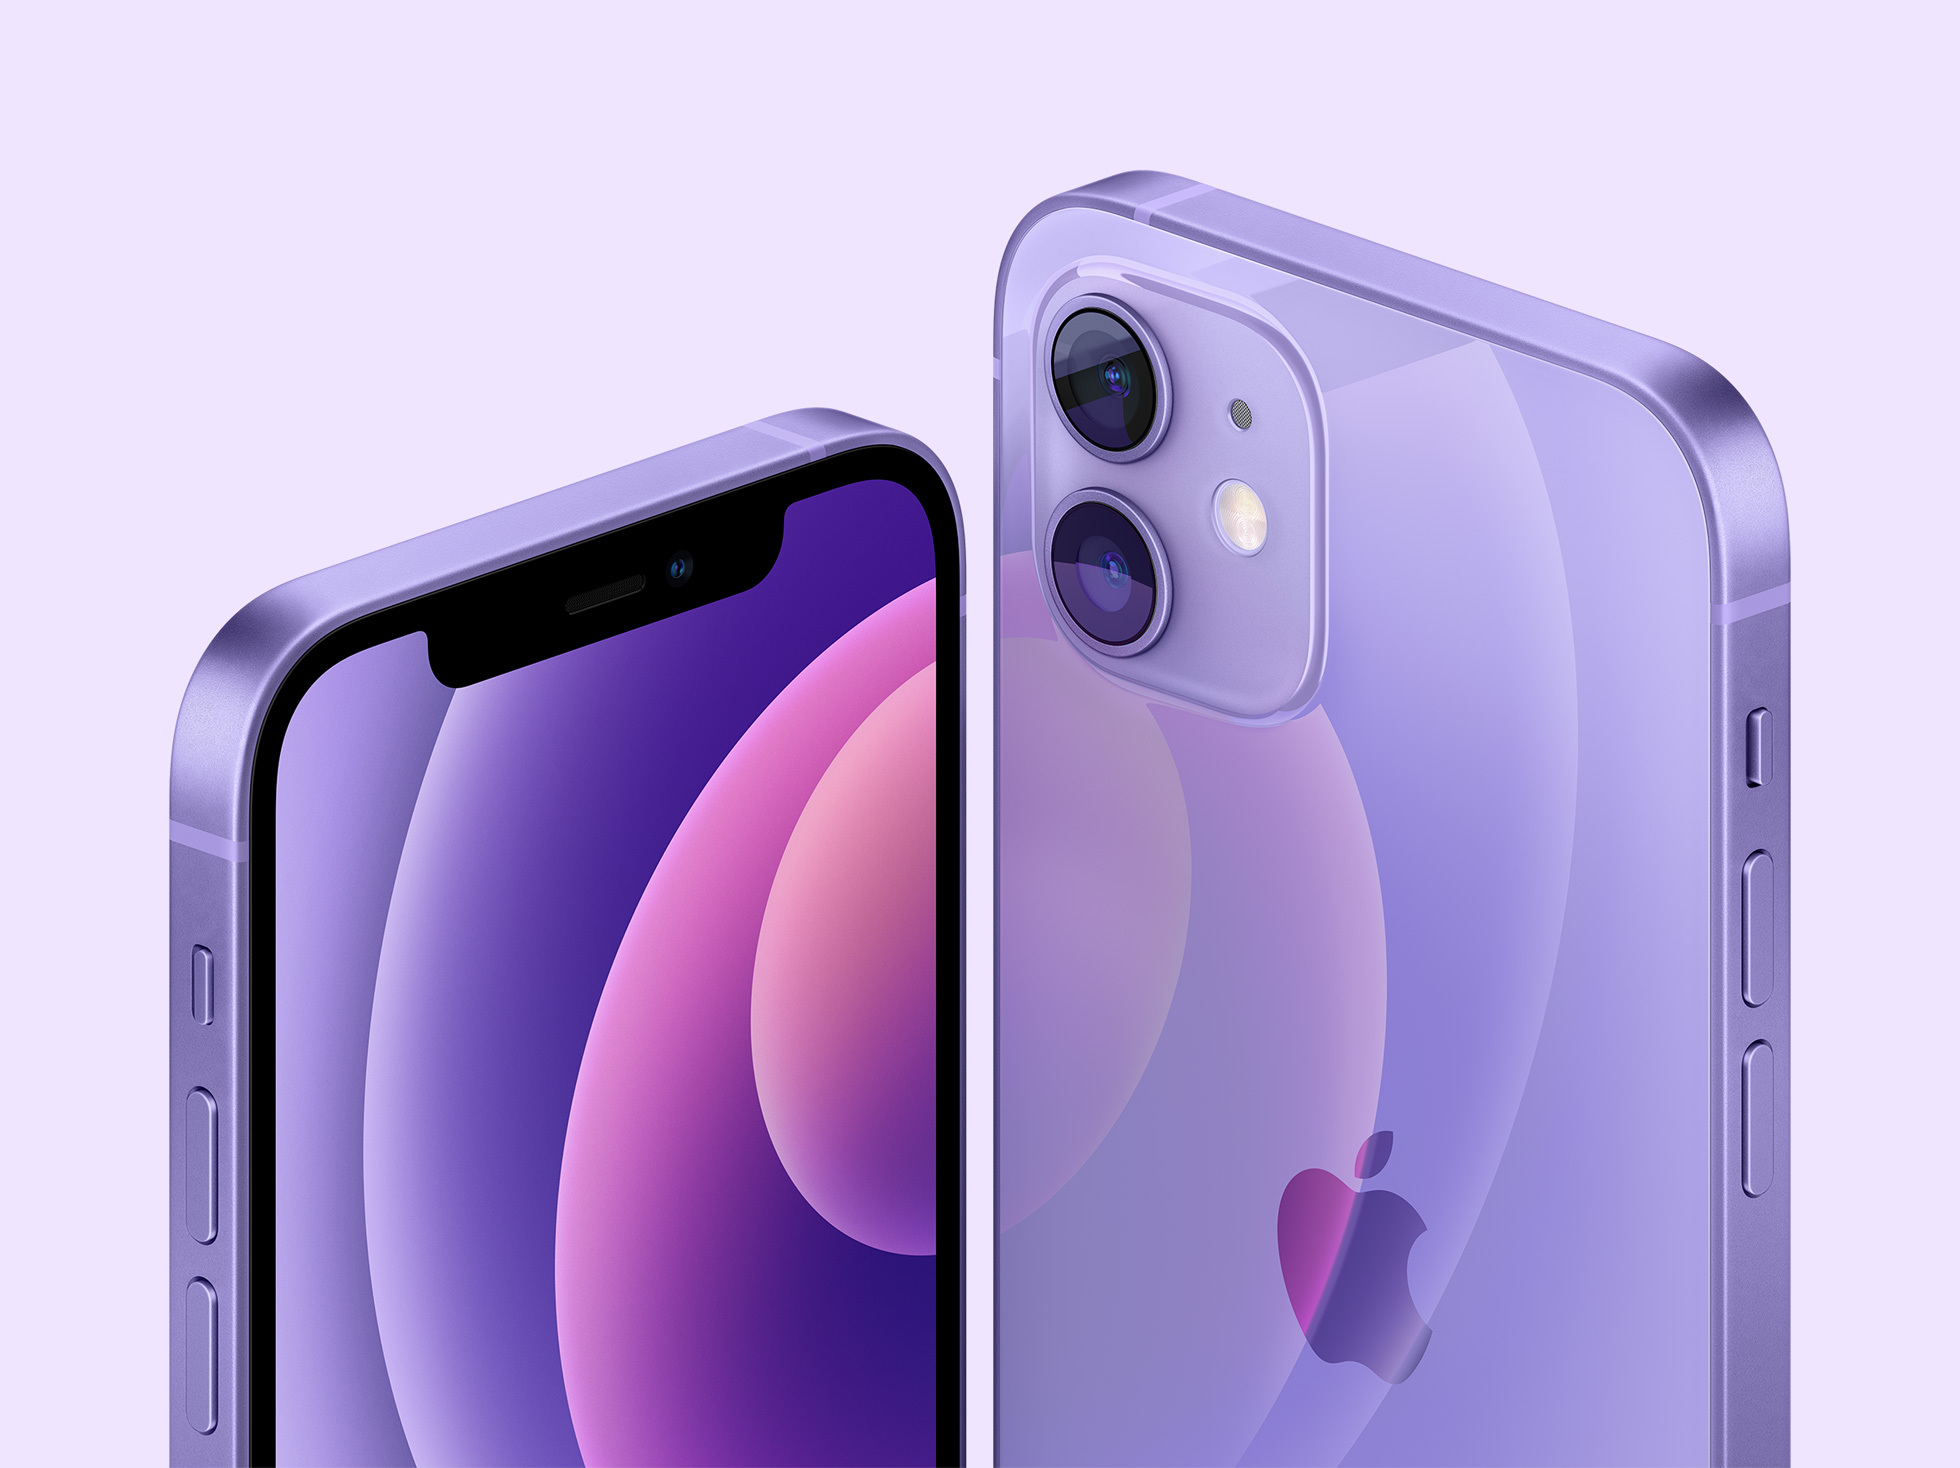 5) A purple iPhone 12